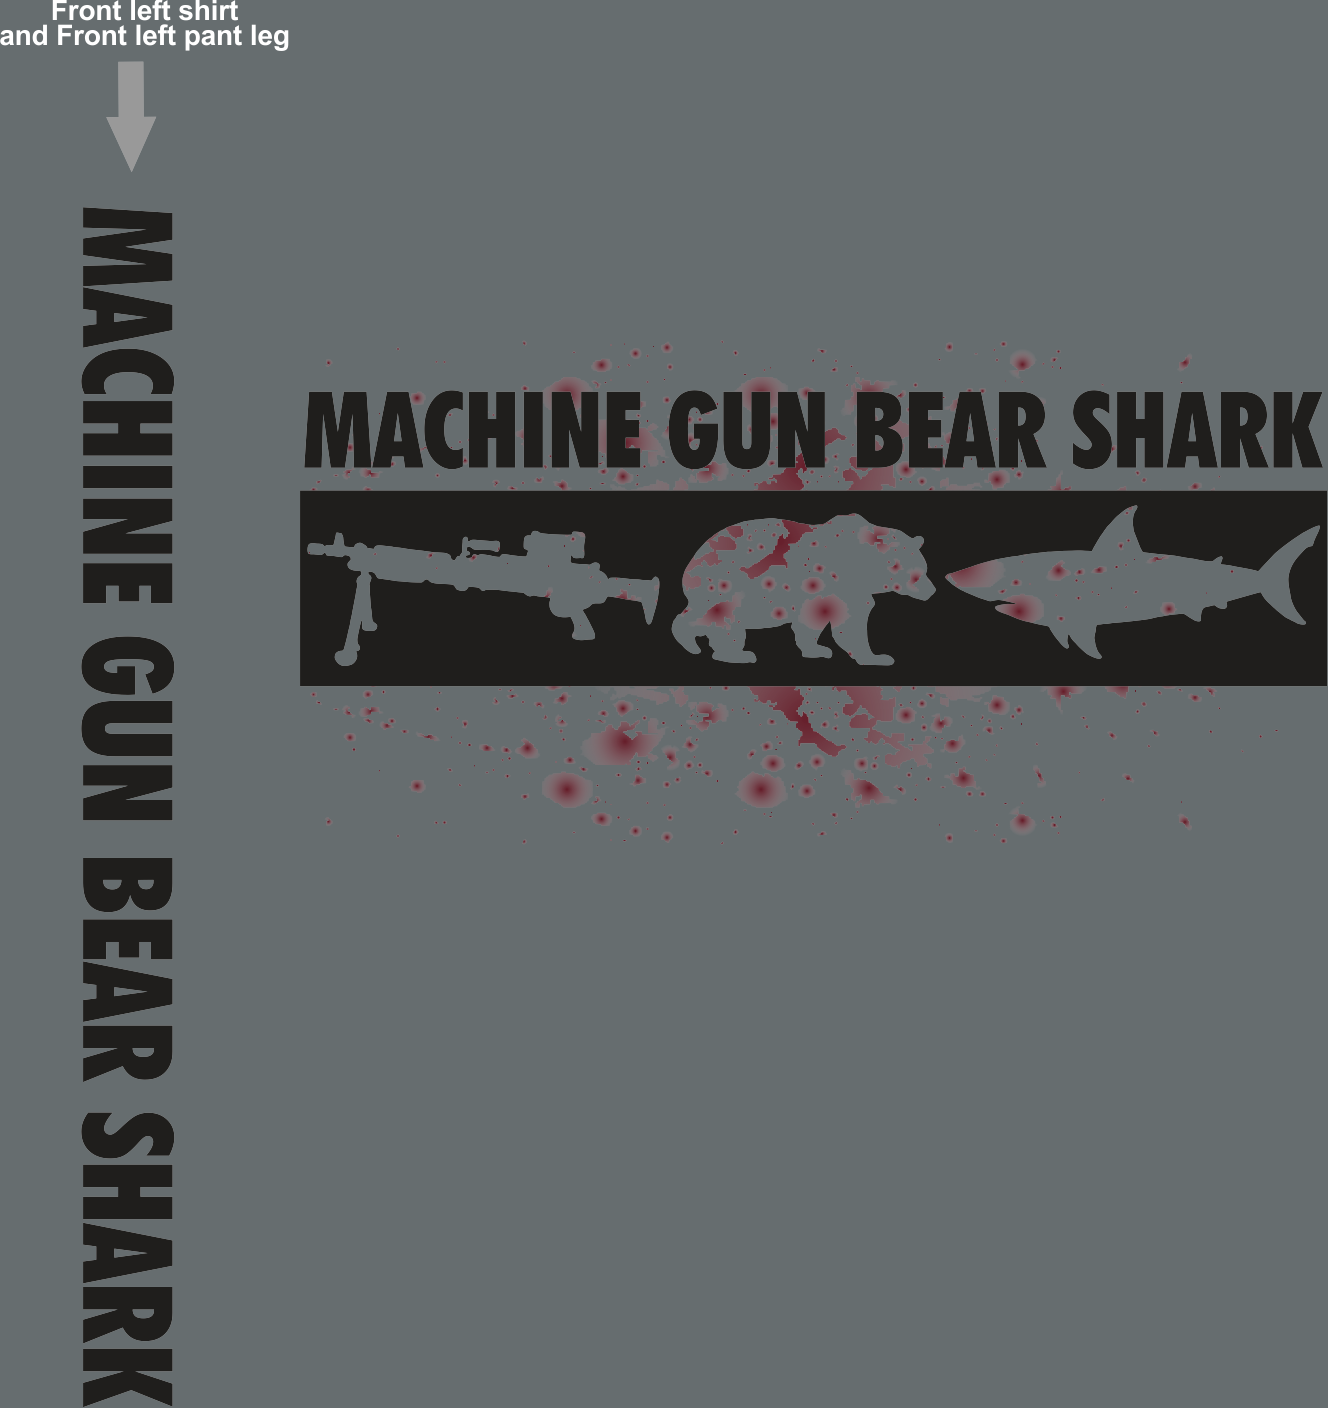 ECHO 795 MACHINE GUN BEAR SHARK GRADUATING DAY 1-19-2016 digital Black Garments